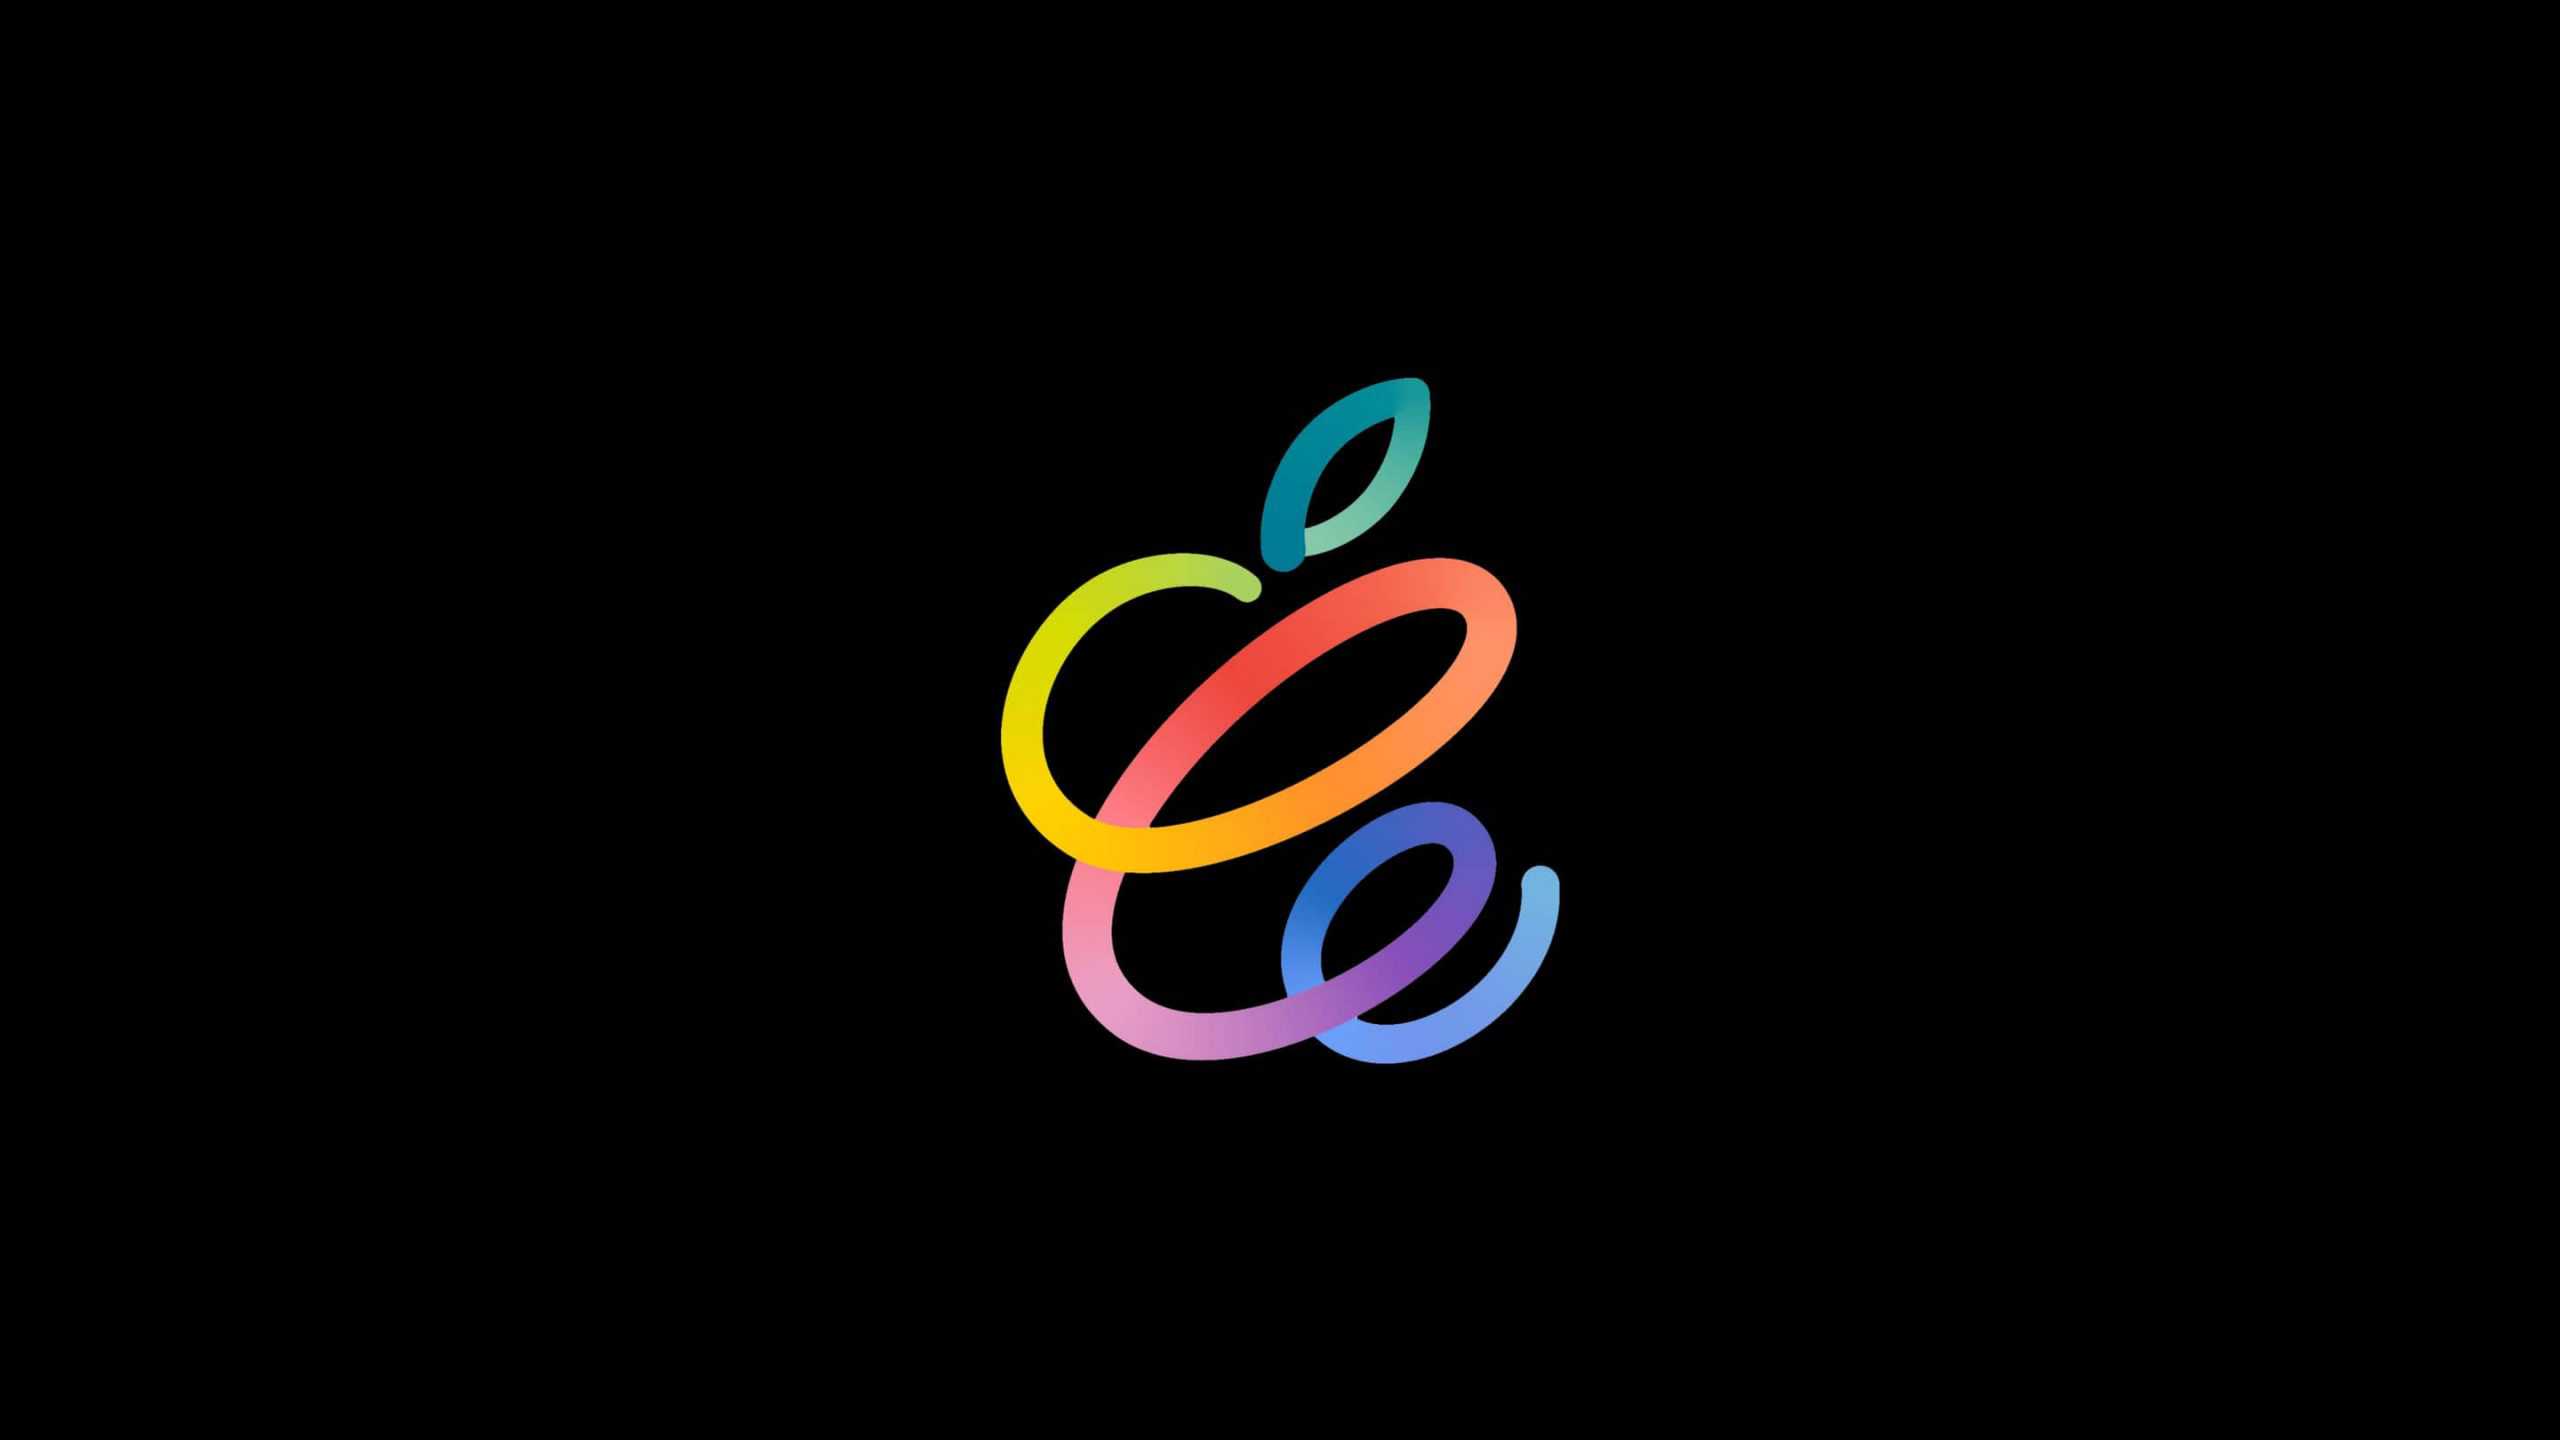 Spring Loaded Apple 2021 Event